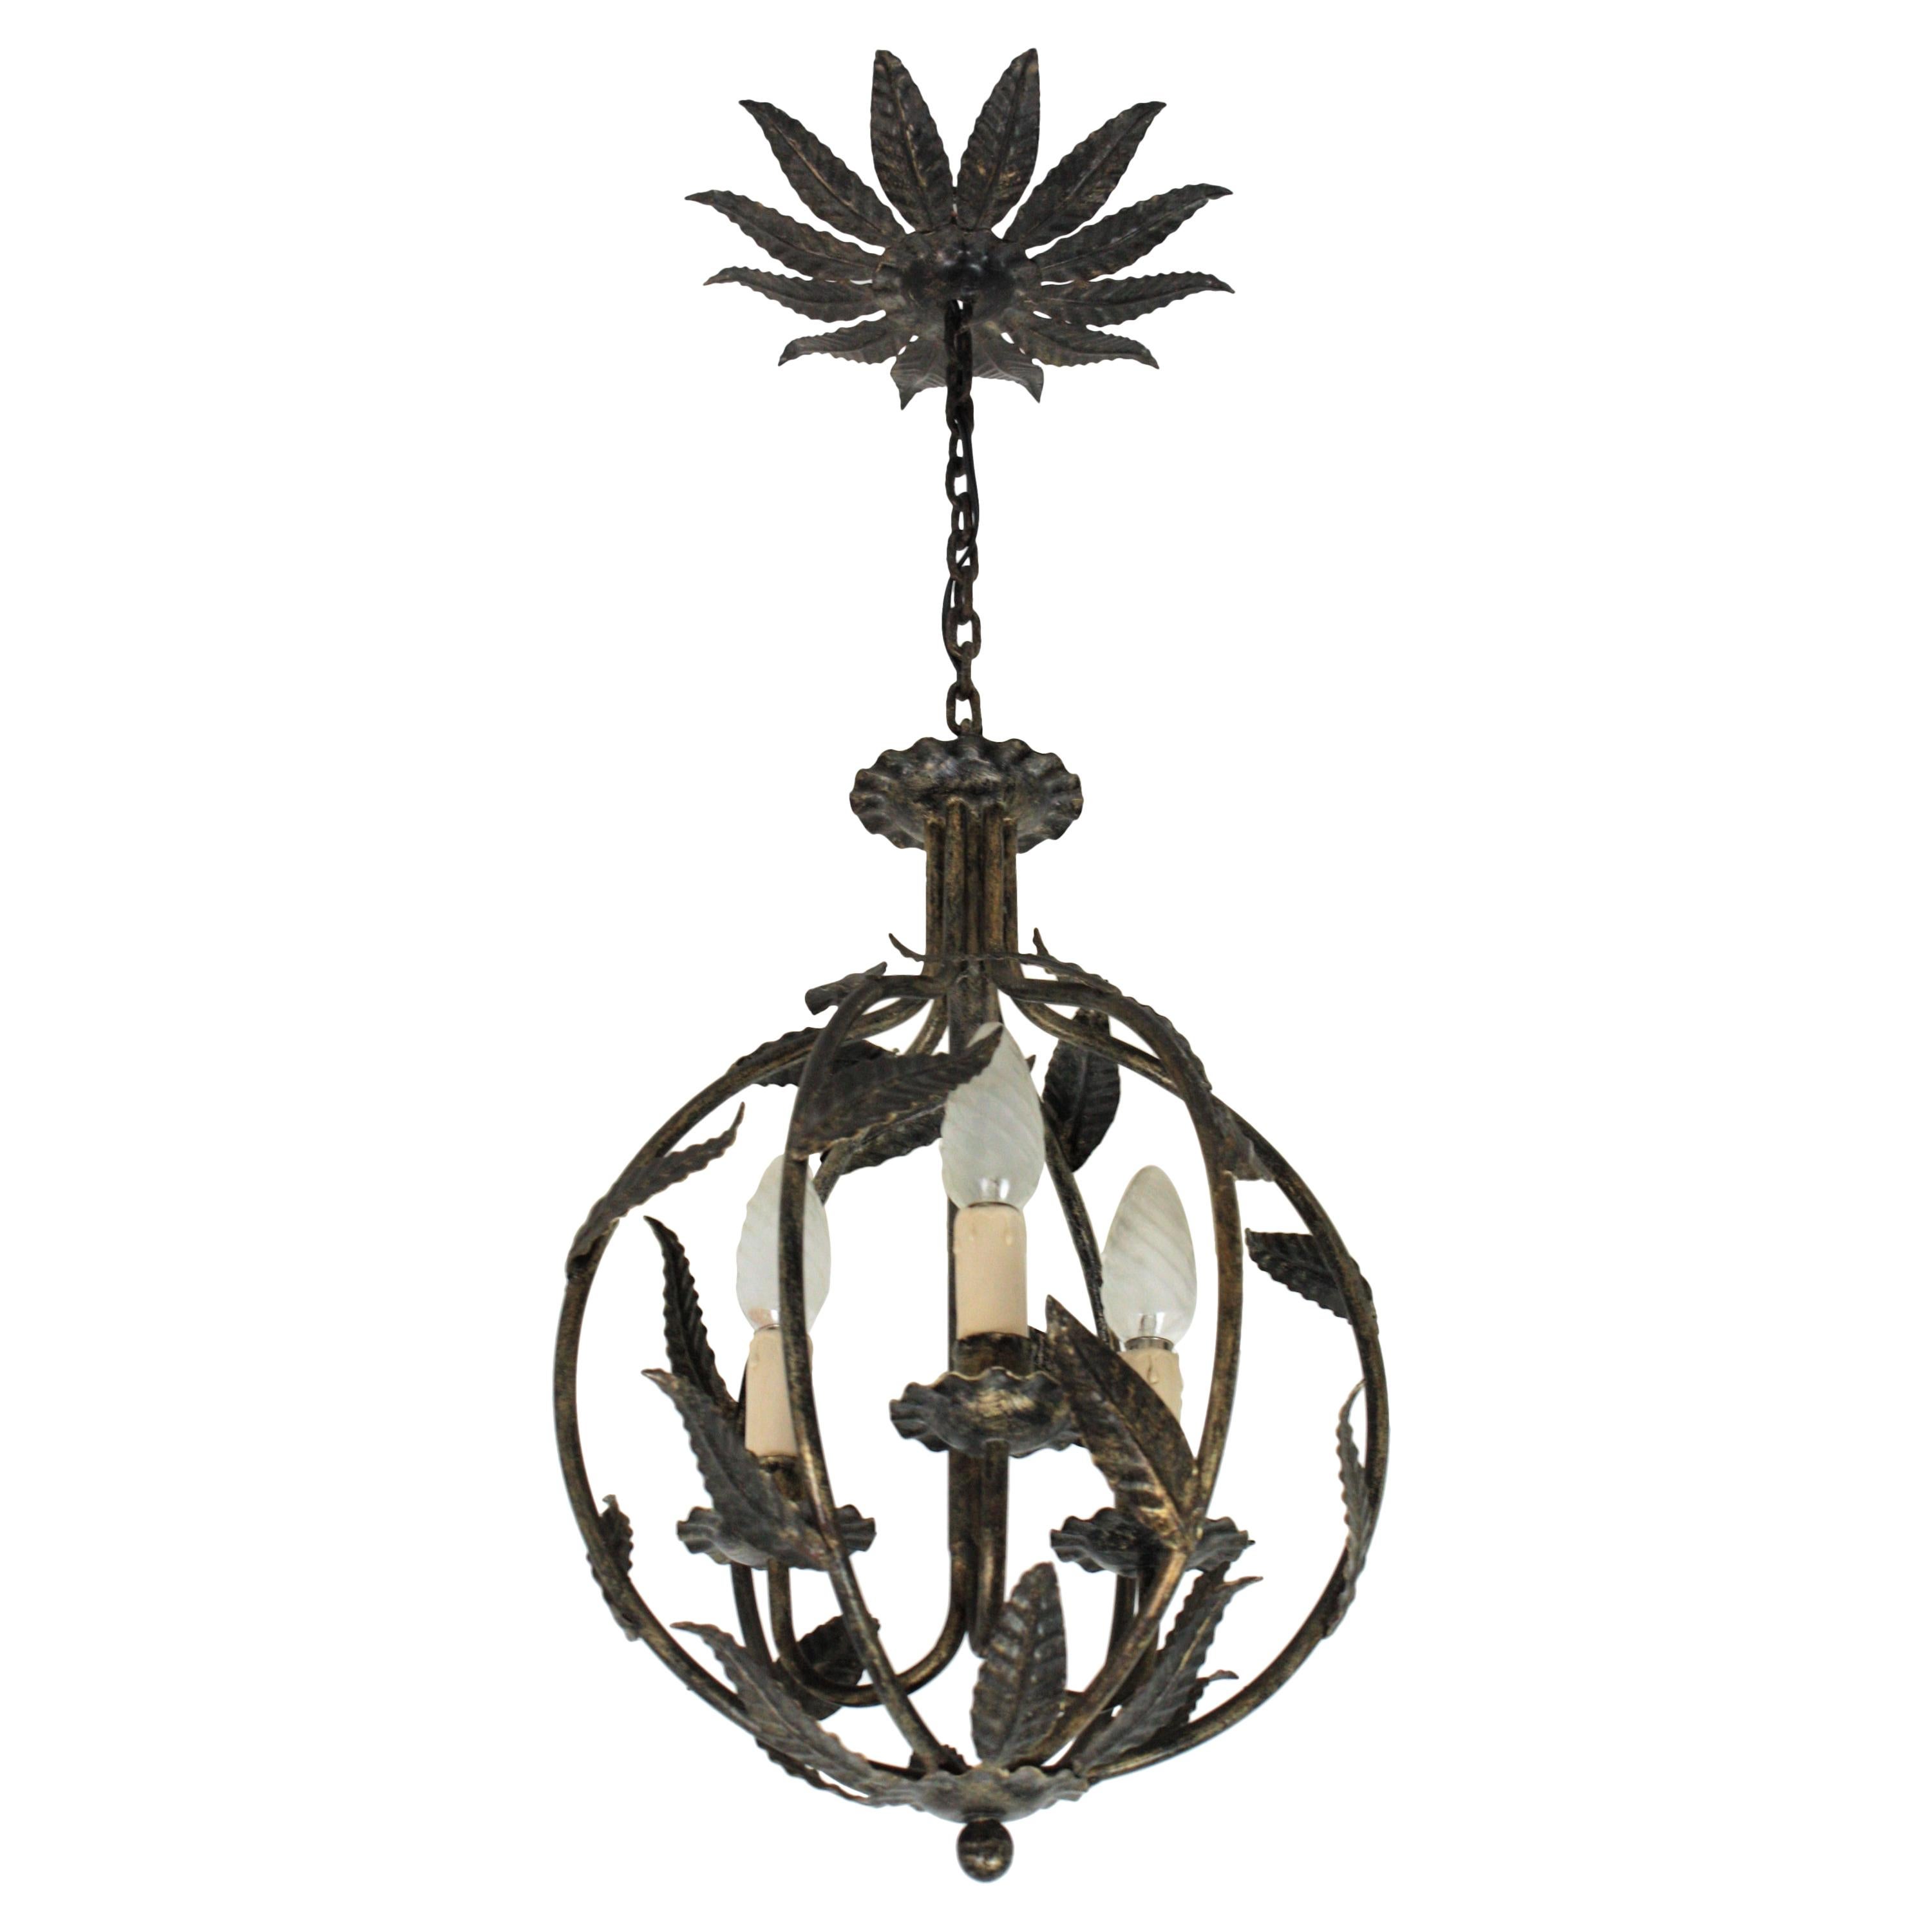 French Parcel-Gilt Wrought Iron Globe Pendant Light / Lantern with Leaves Design